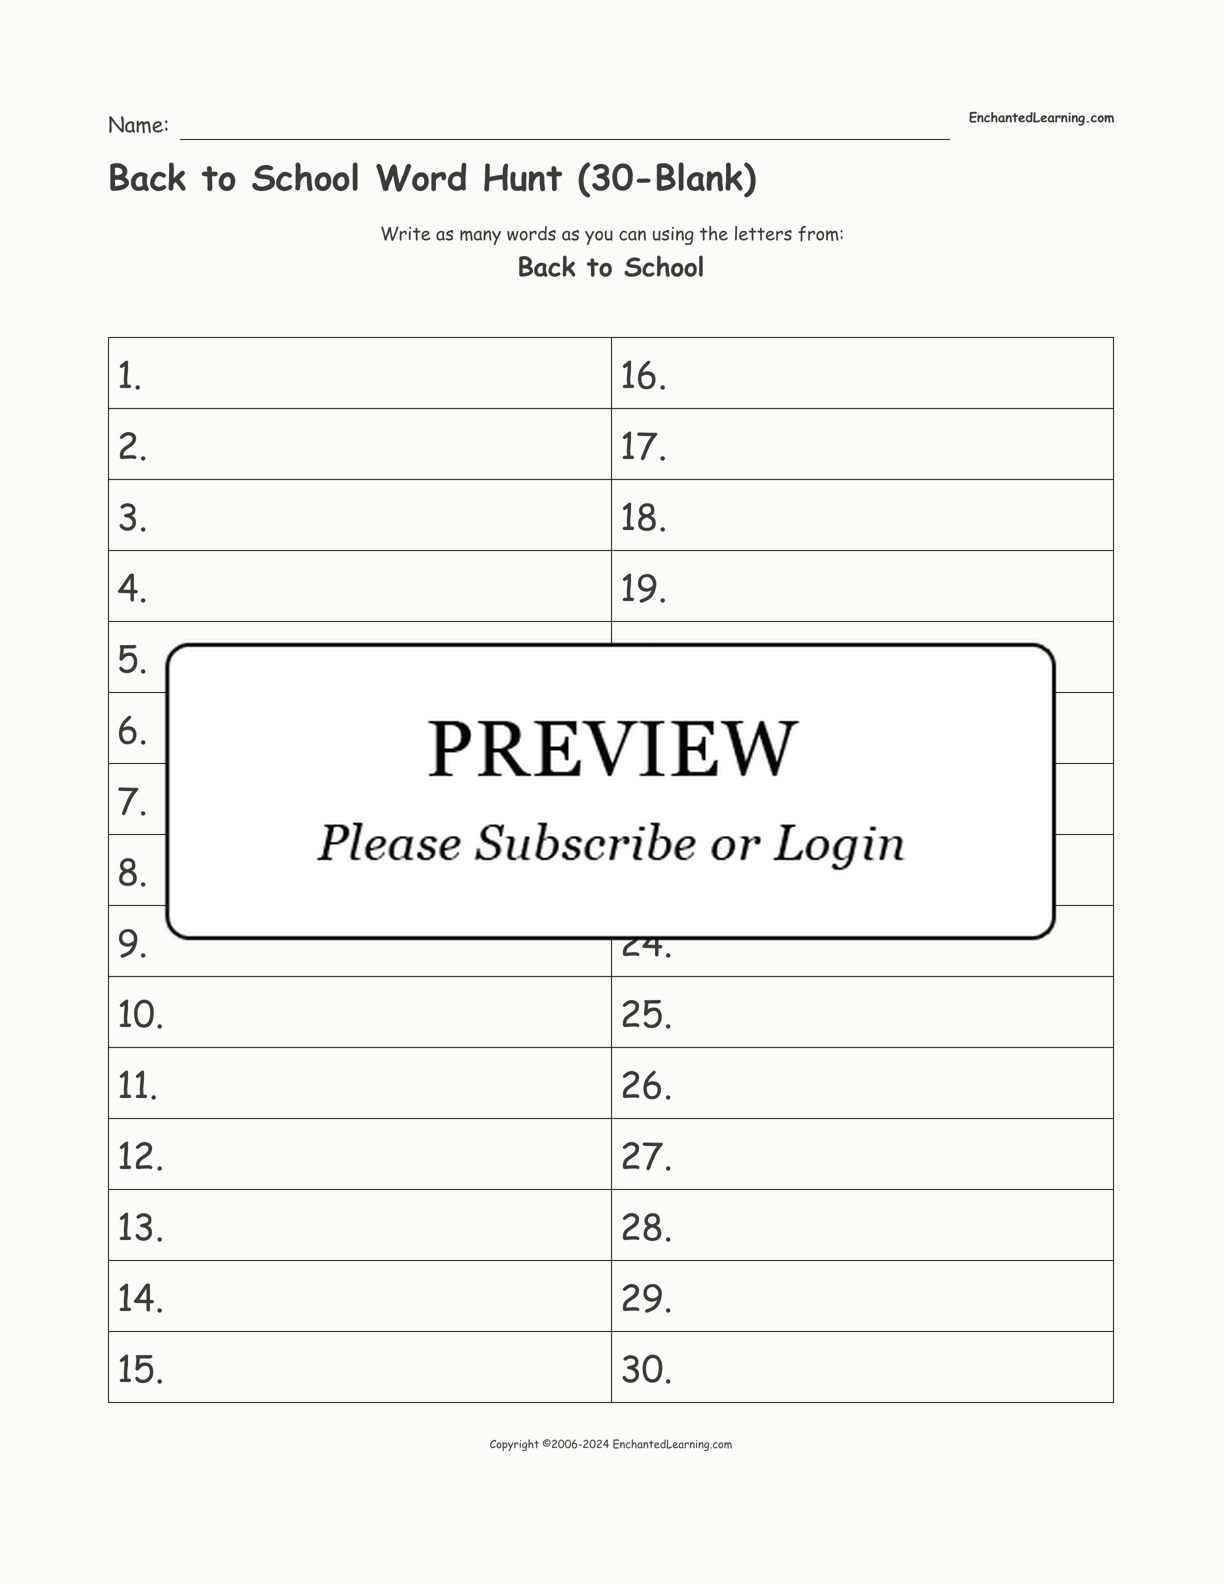 Back to School Word Hunt (30-Blank) interactive worksheet page 1